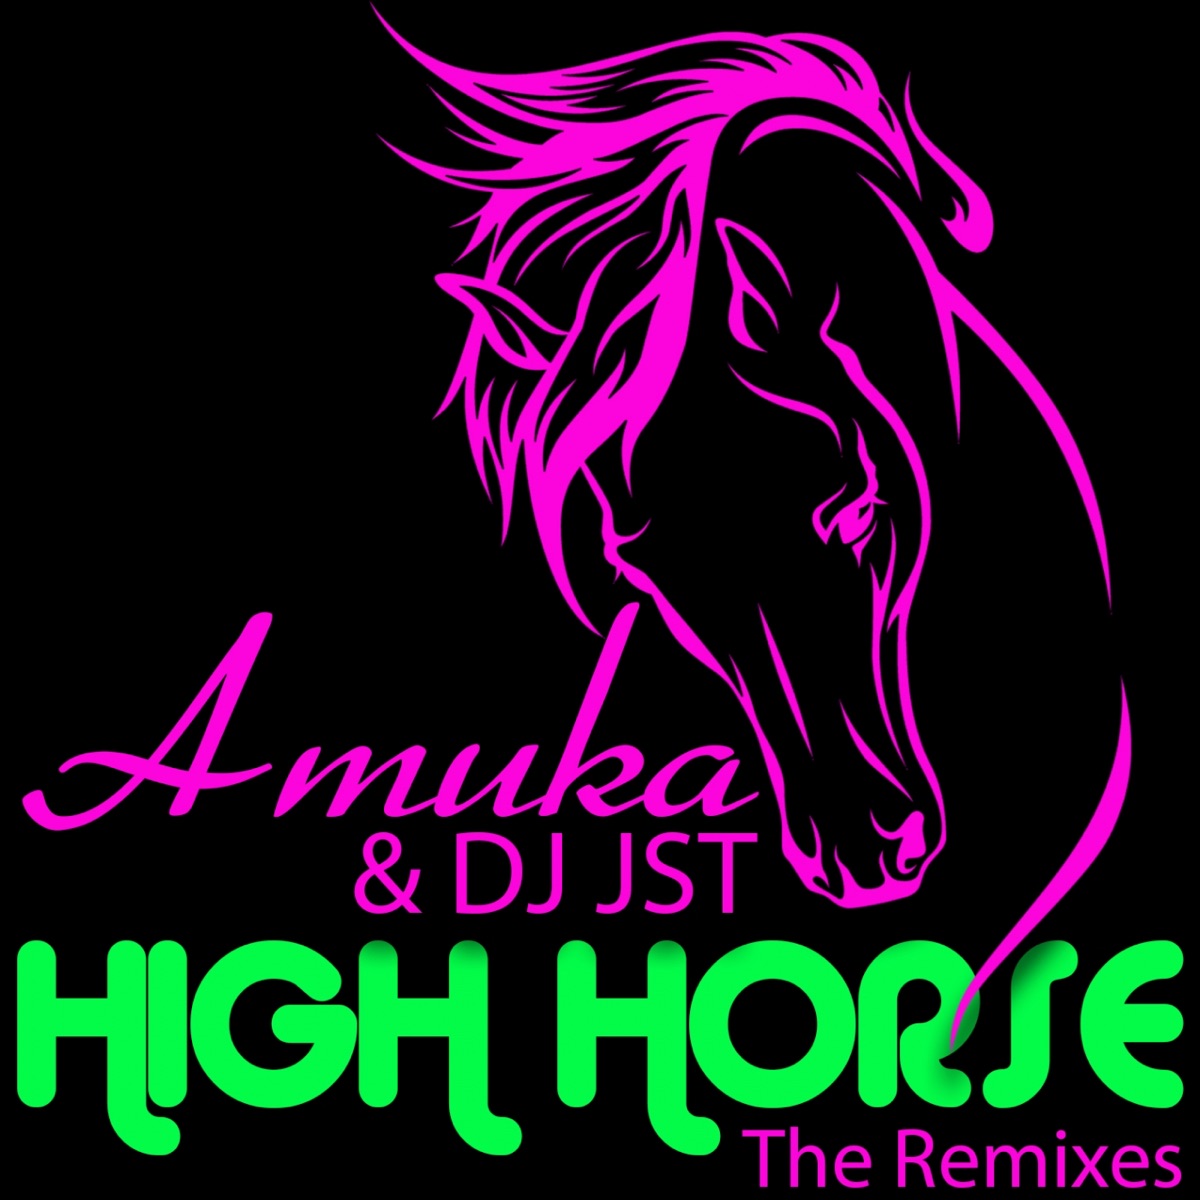 Amuka & DJ JST High Horse cover artwork